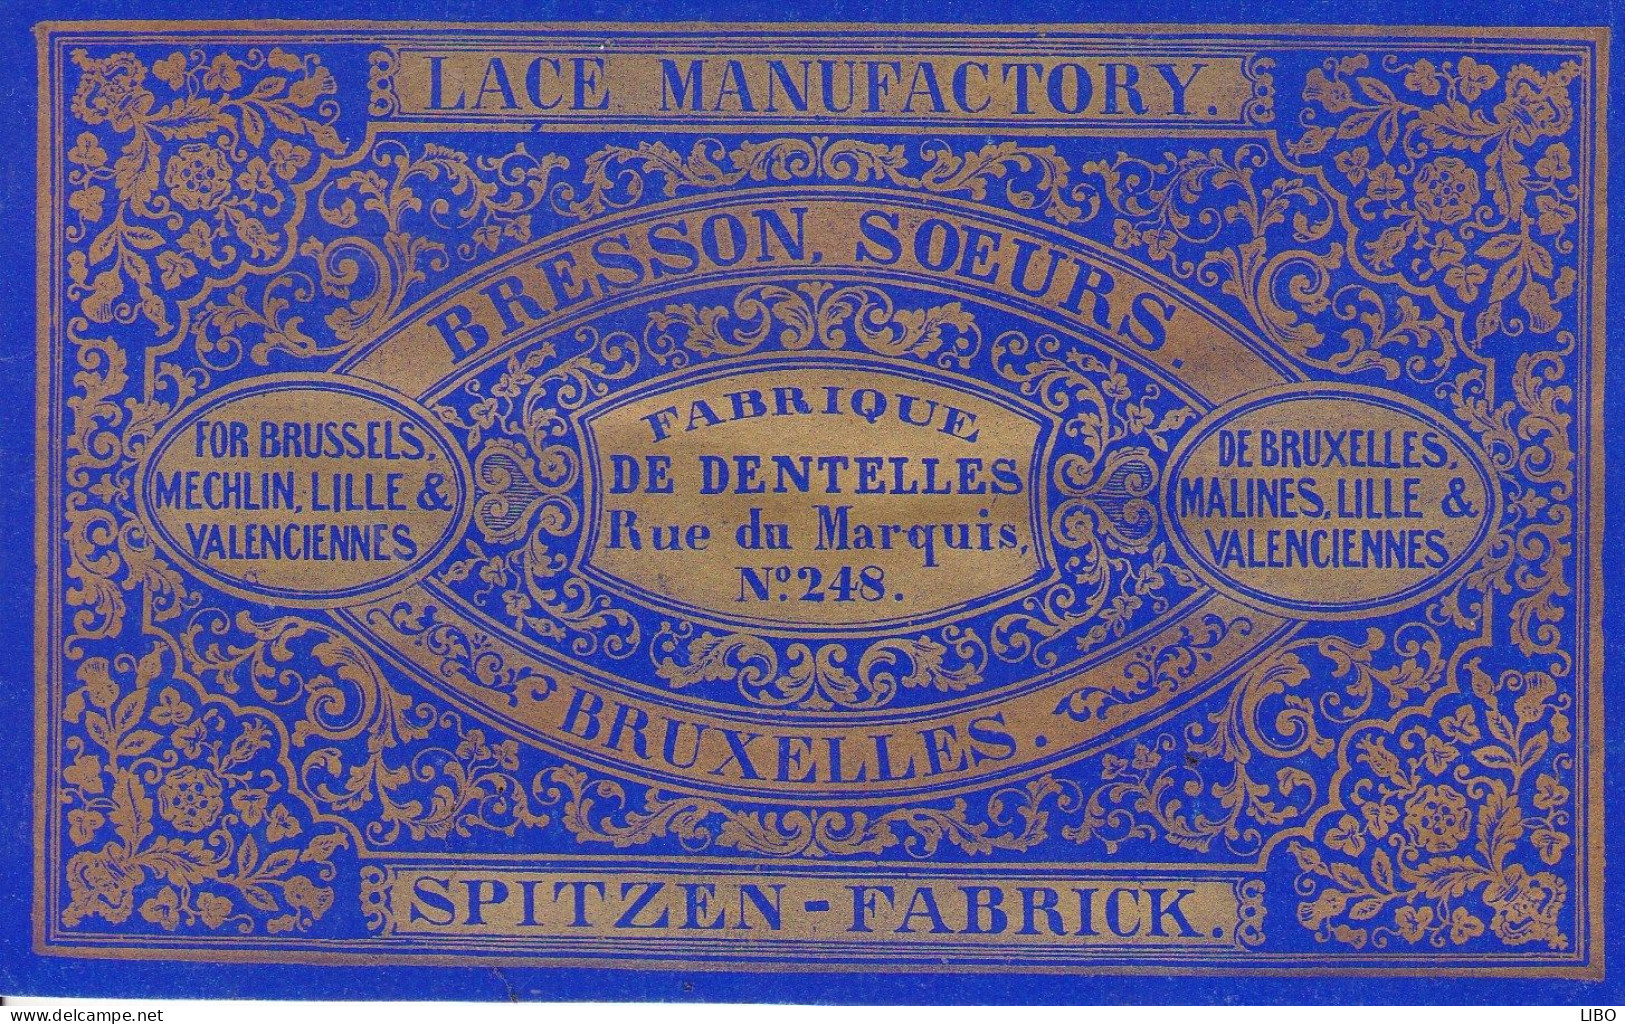 Fabrique De Dentelles SPITZEN-FABRICK BRESSON Soeurs Bruxelles Rue Du Marquis BRUXELLES LILLE VALENCIENNES C. 1860 - Tarjetas De Visita